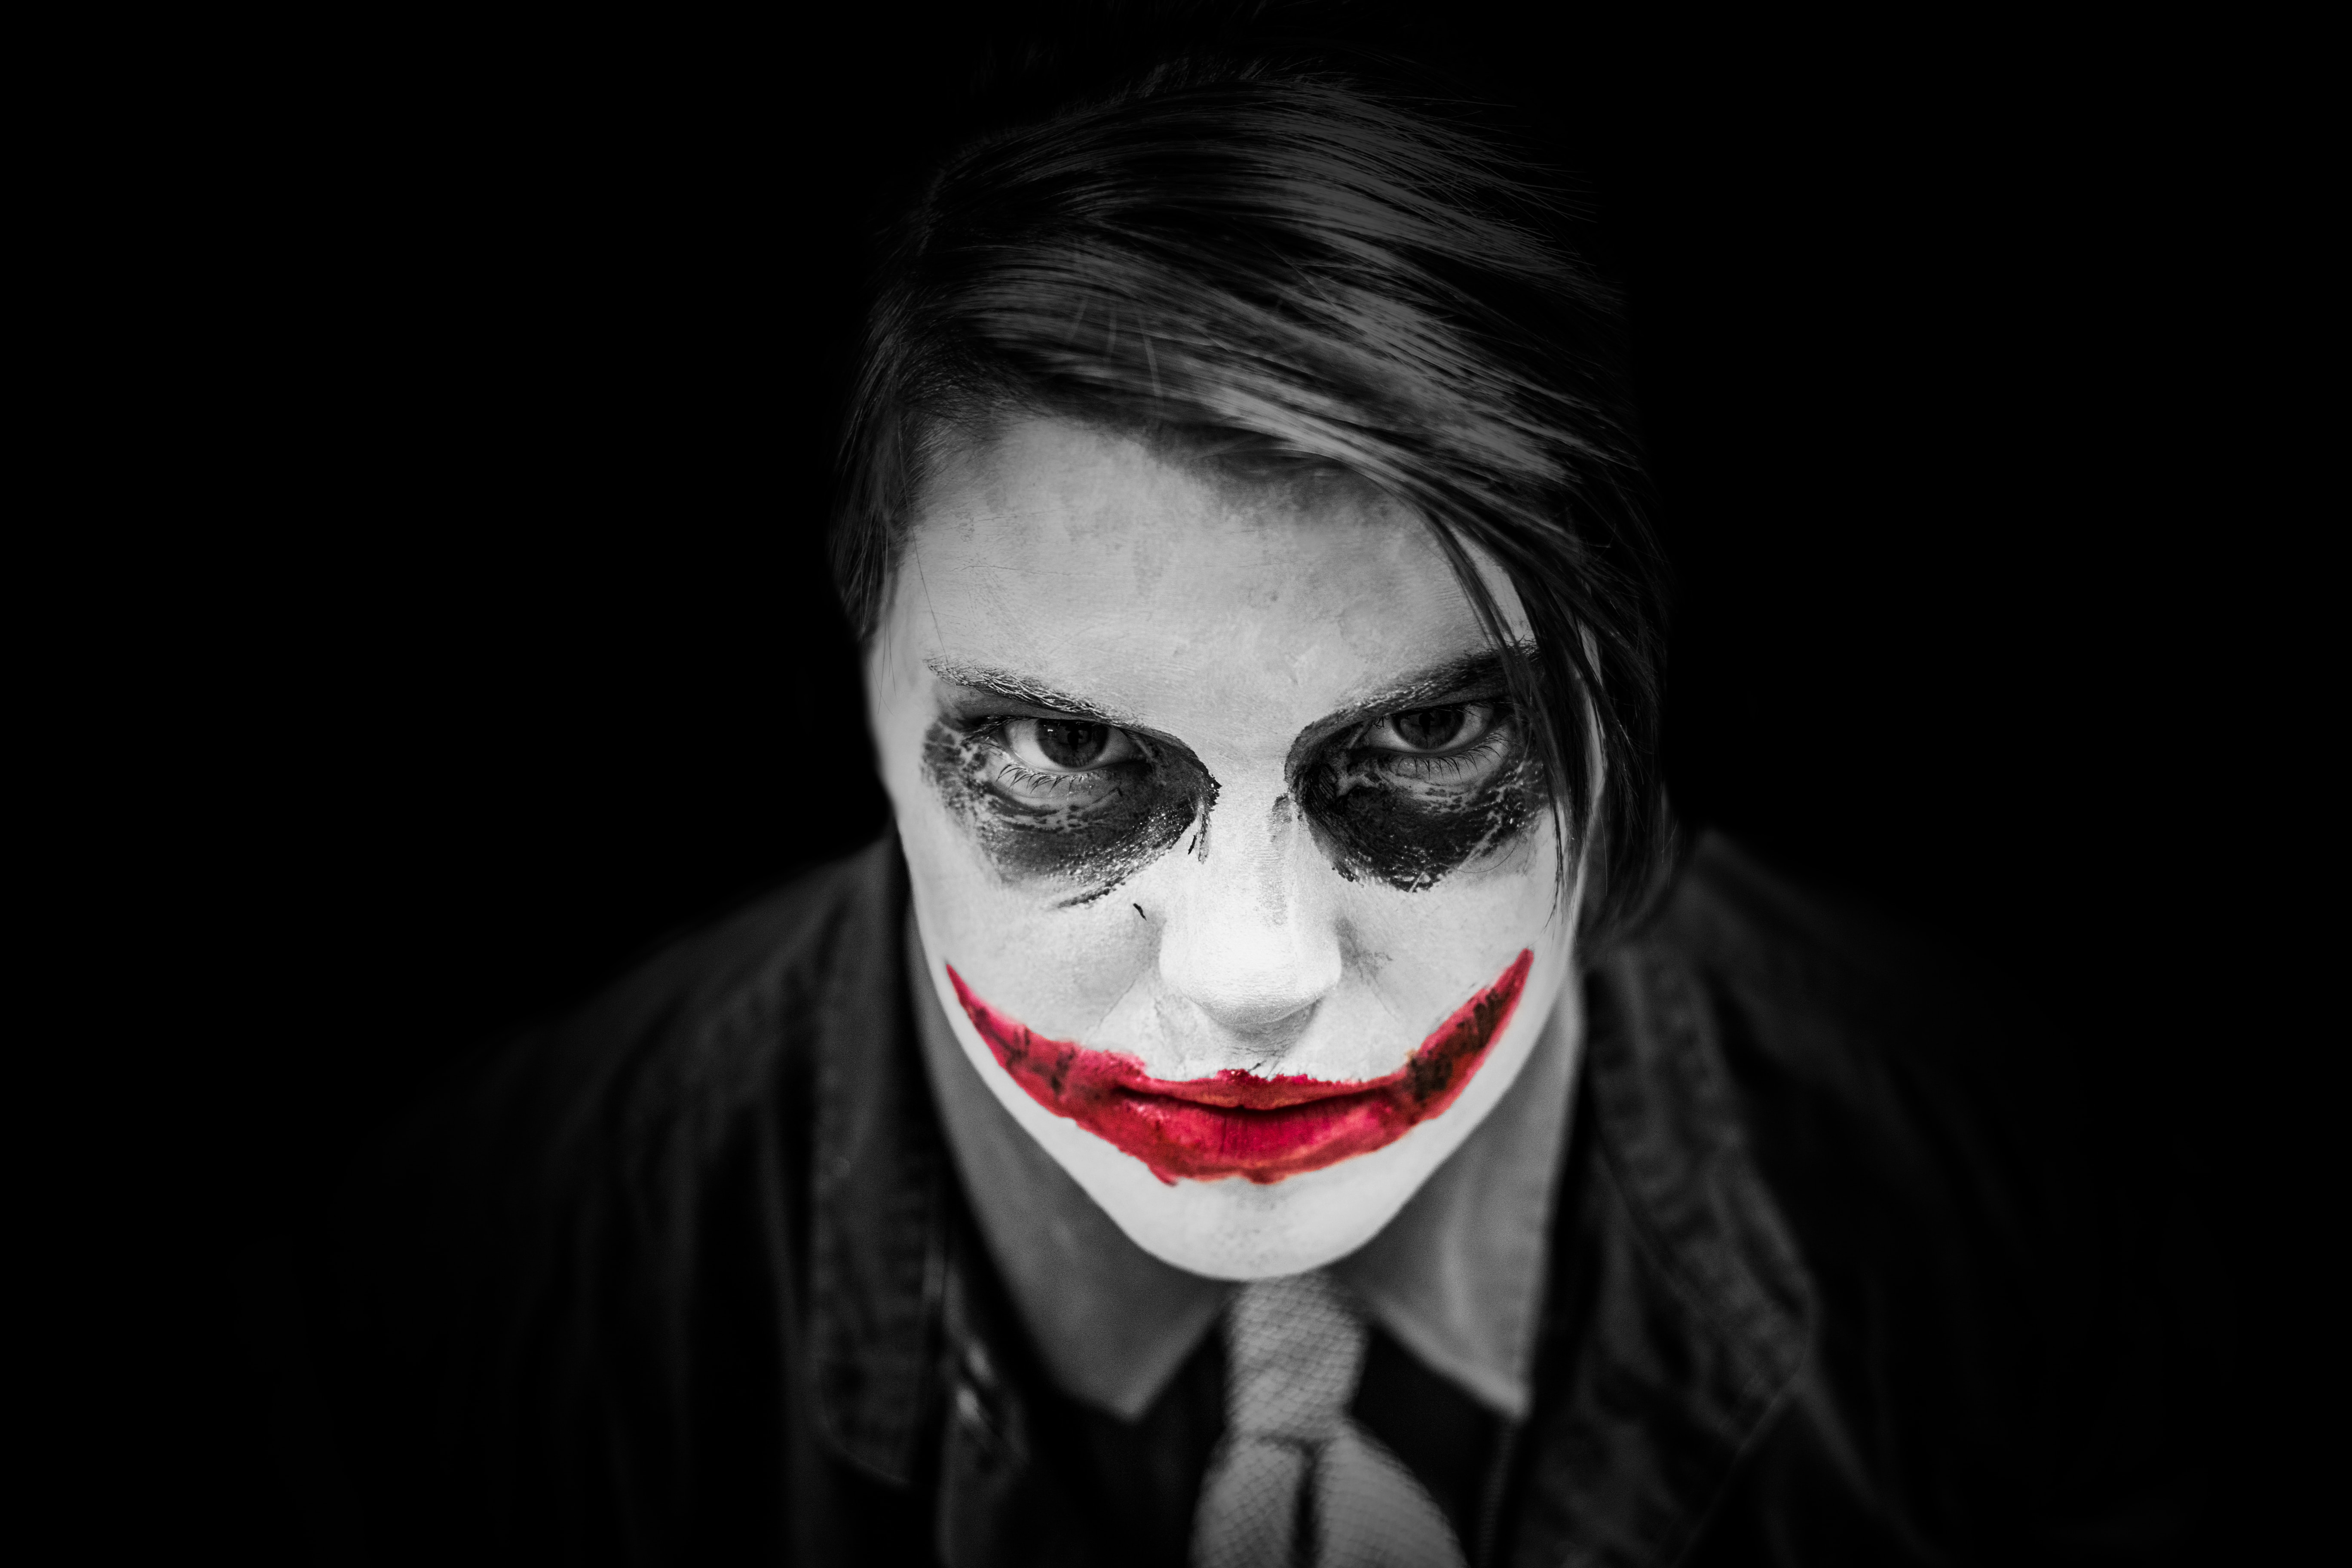 Joker Mask Wallpaper Download [HD]. Download Free Image On